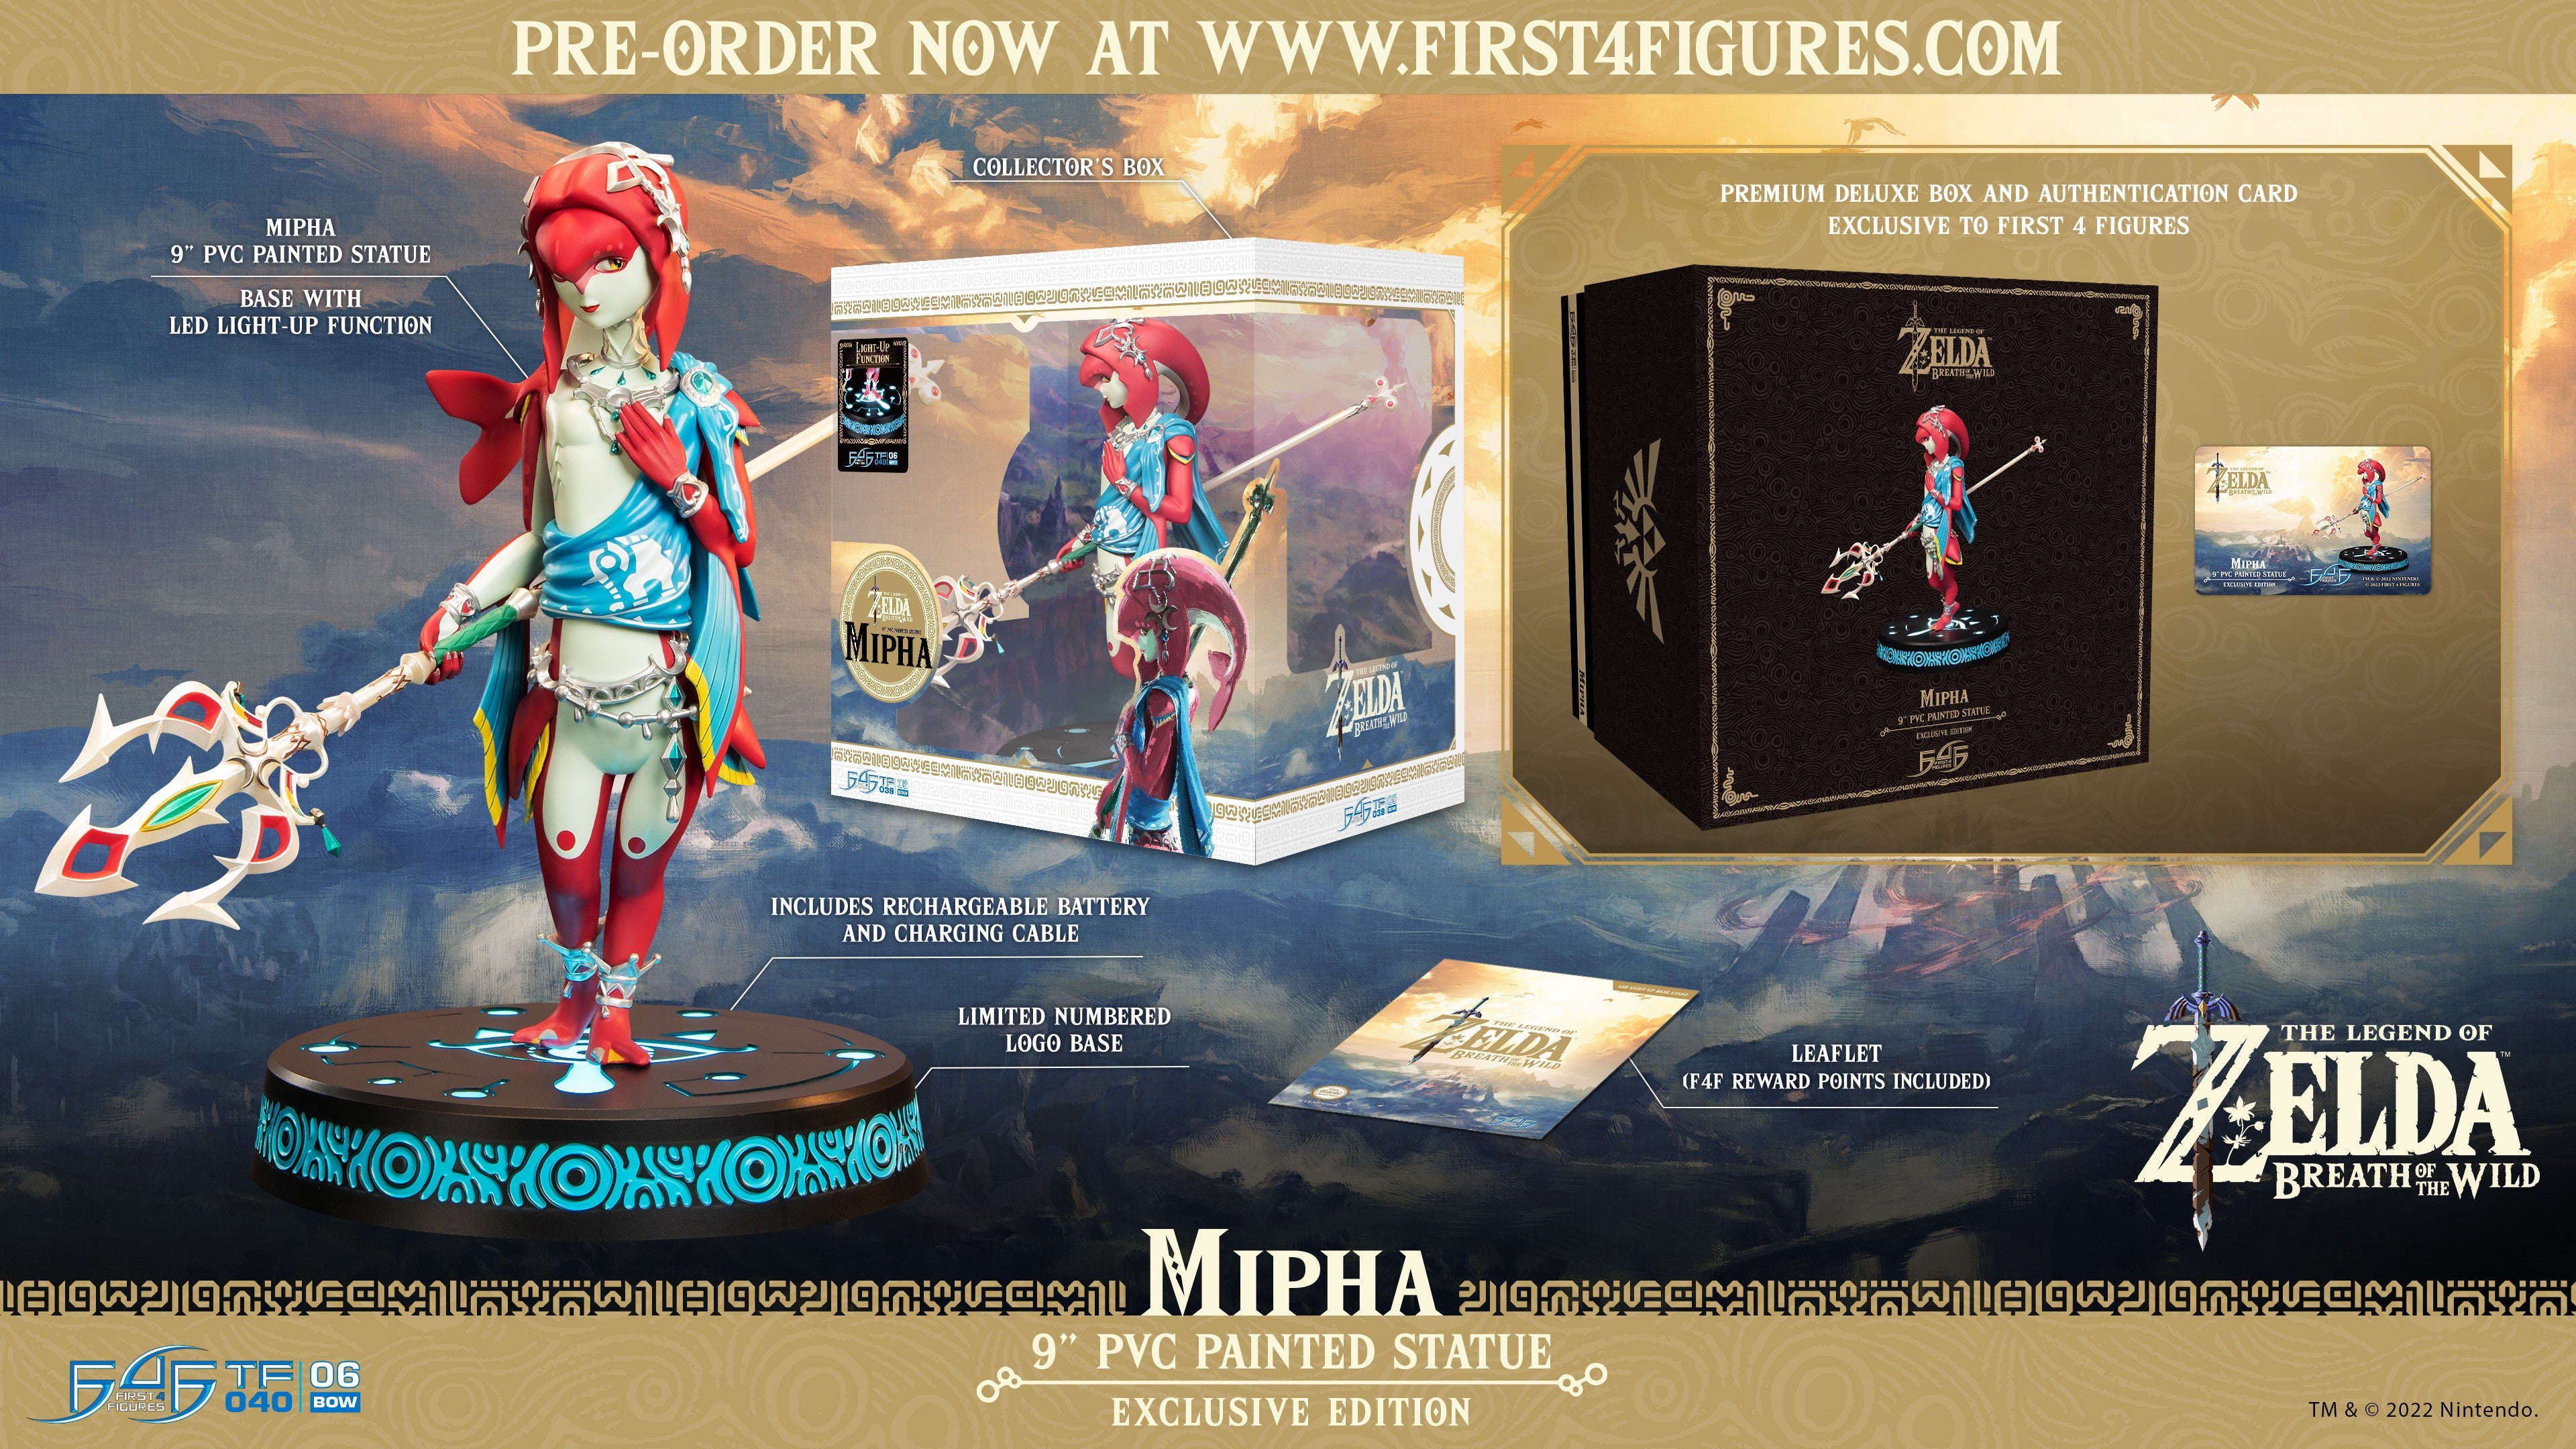 The Legend of Zelda - Mipha PVC Statue Collectors Edition